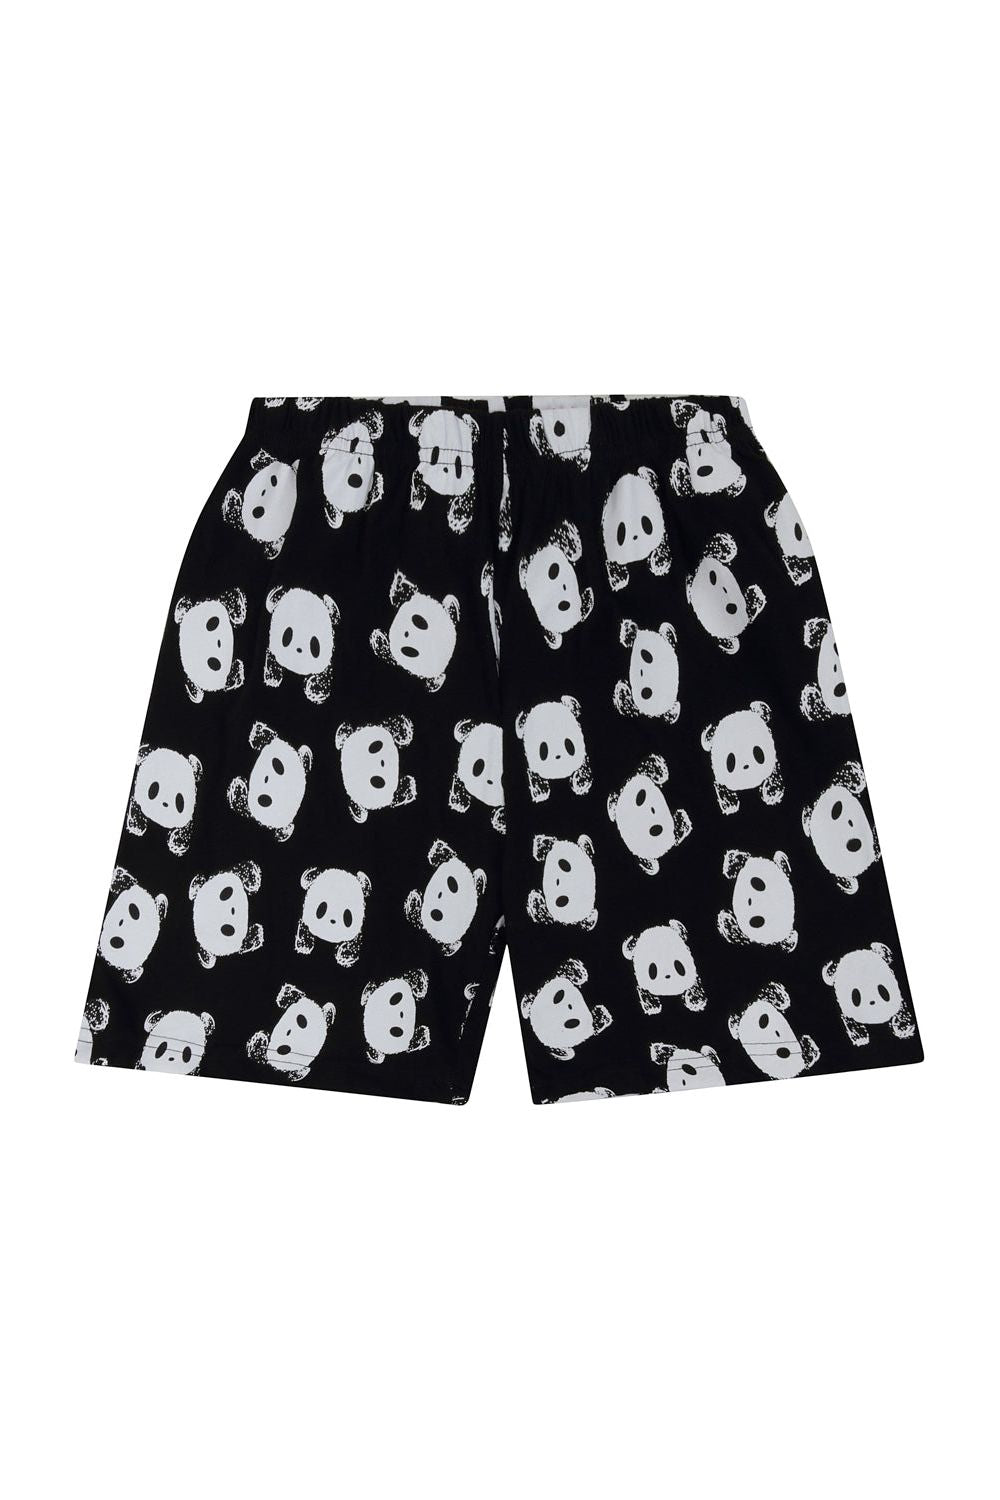 I want to Sleep all Day Panda short Pyjamas - Pyjamas.com